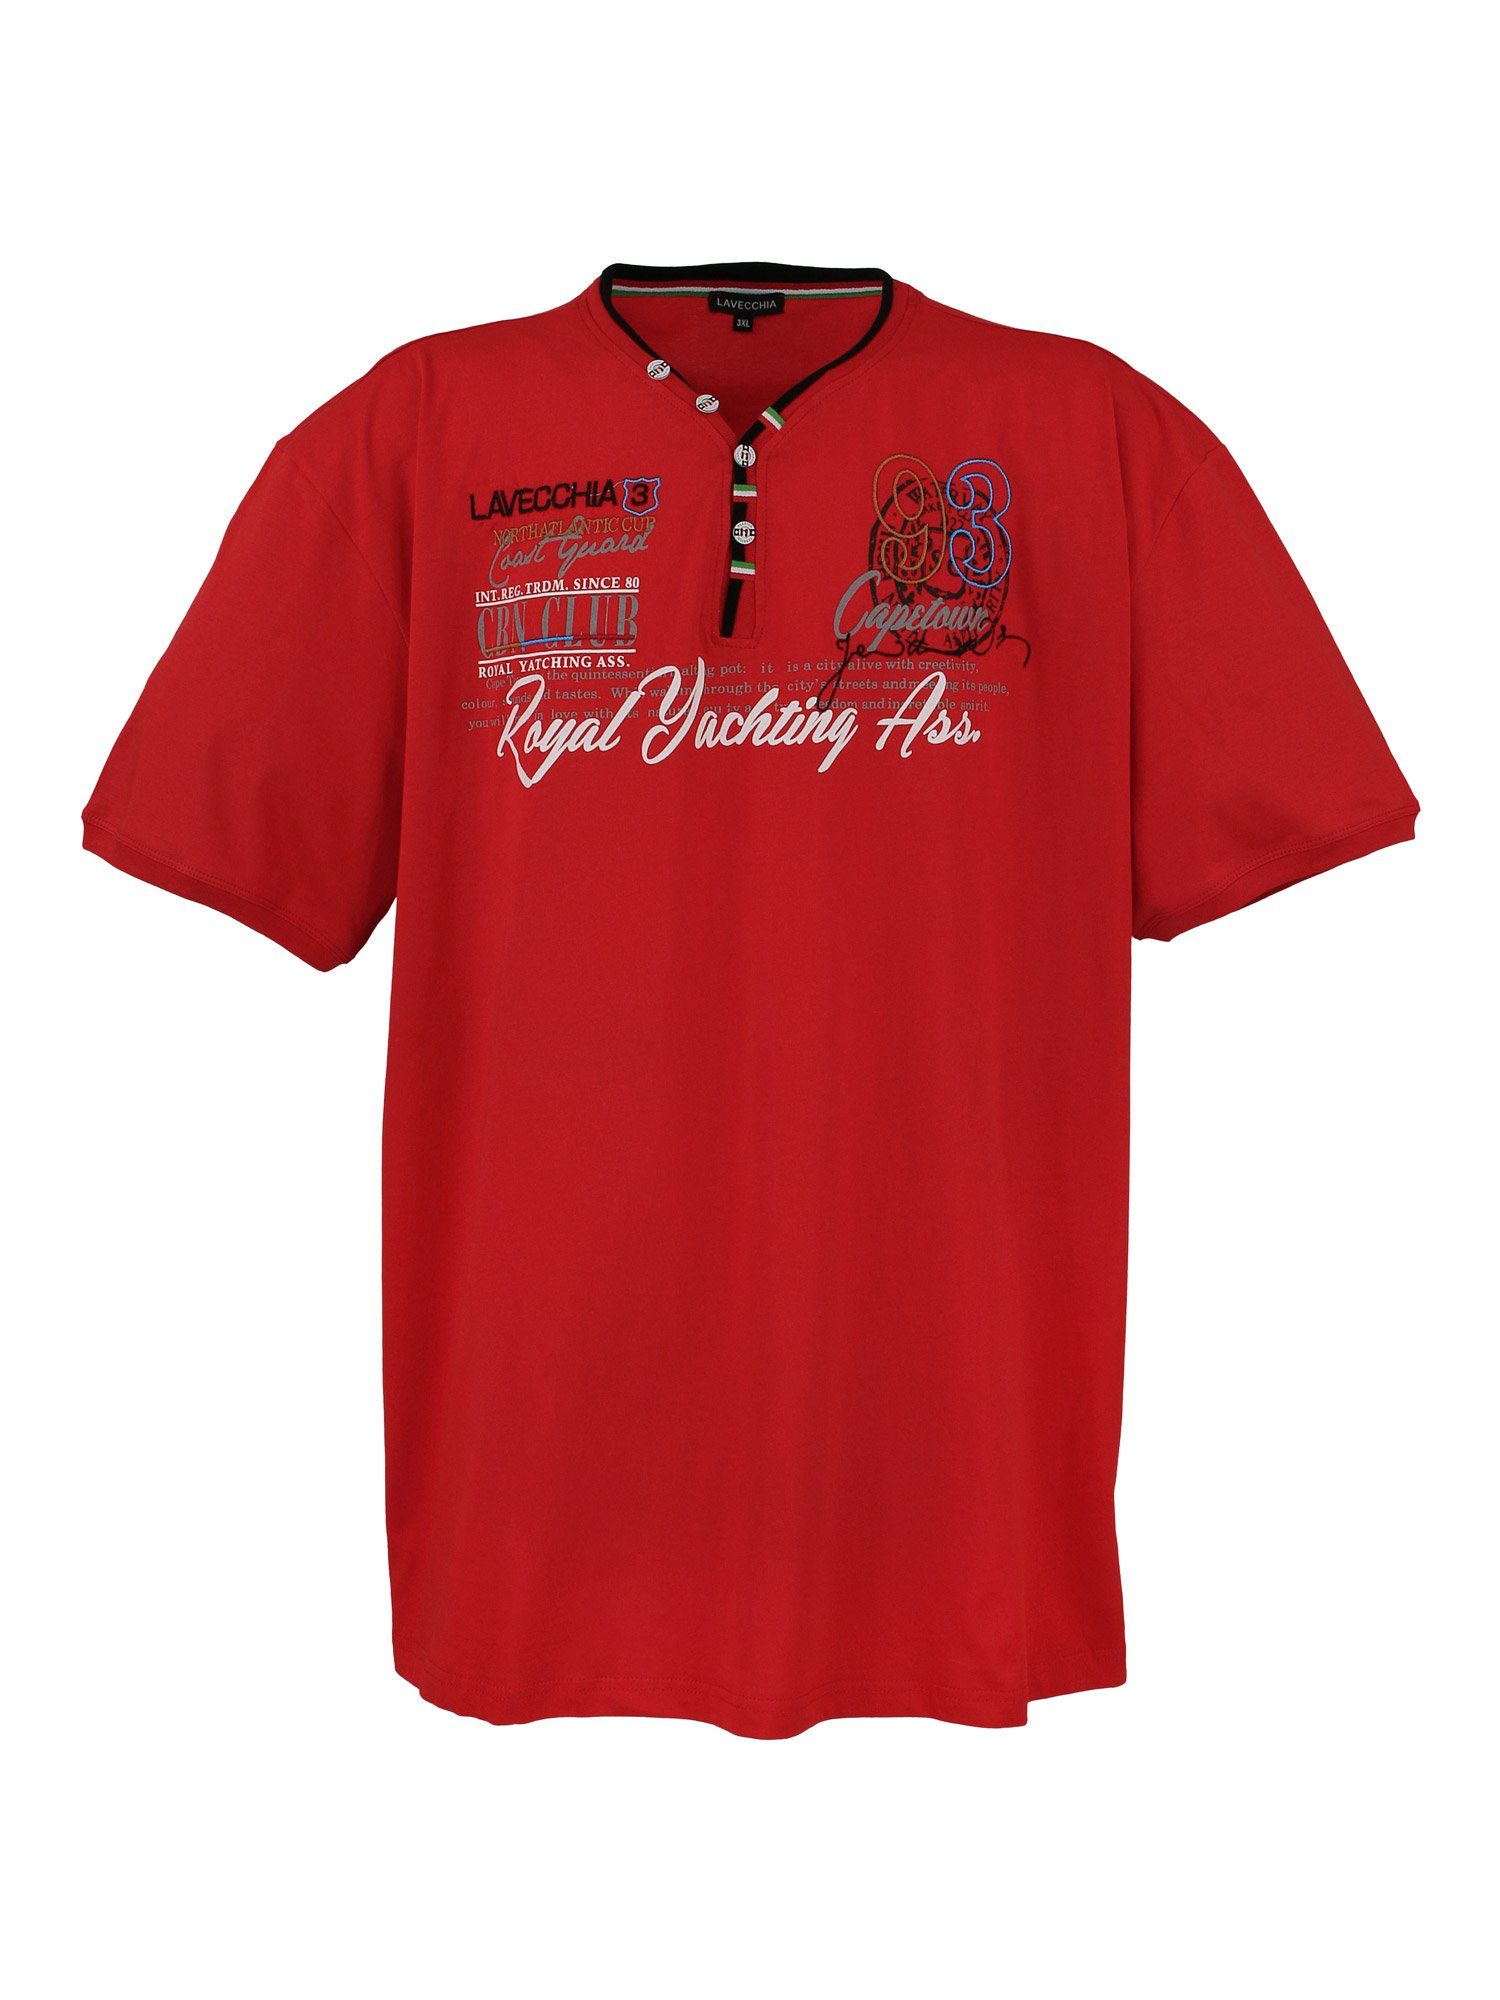 Lavecchia T-Shirt Übergrößen Herren V-Shirt LV-608 Herrenshirt V-Ausschnitt rot | V-Shirts